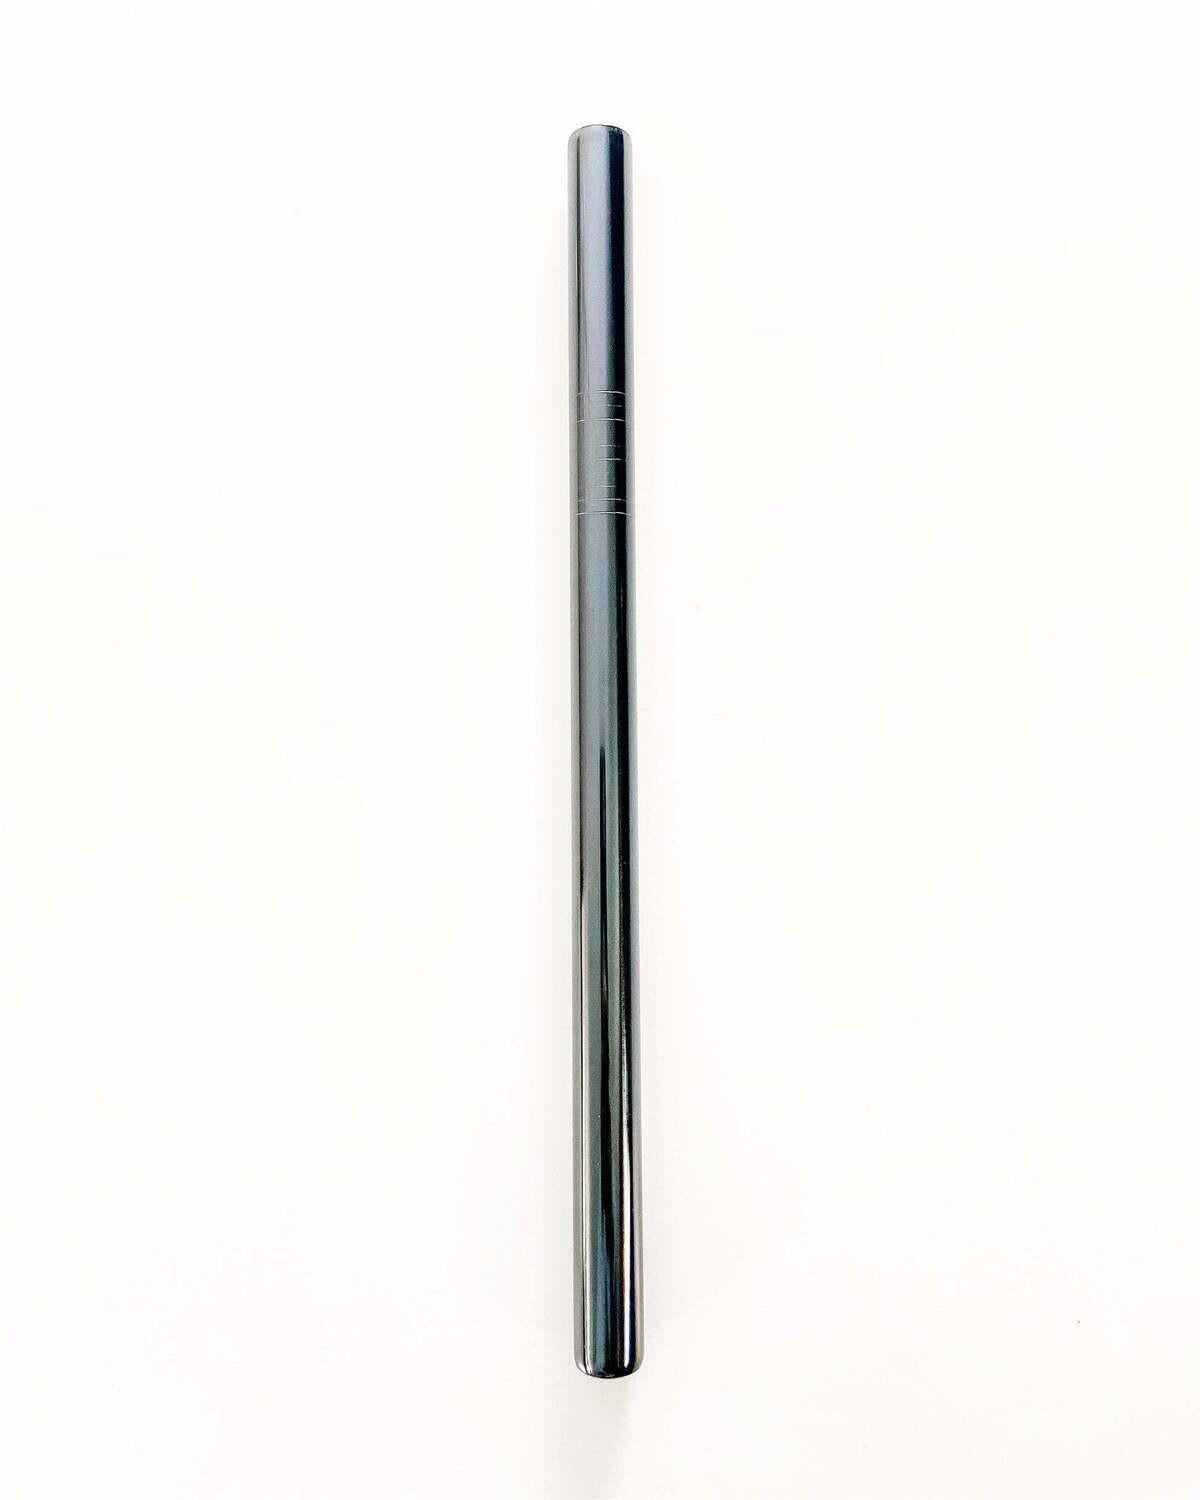 Extra-Long Metal Smoothie Straw